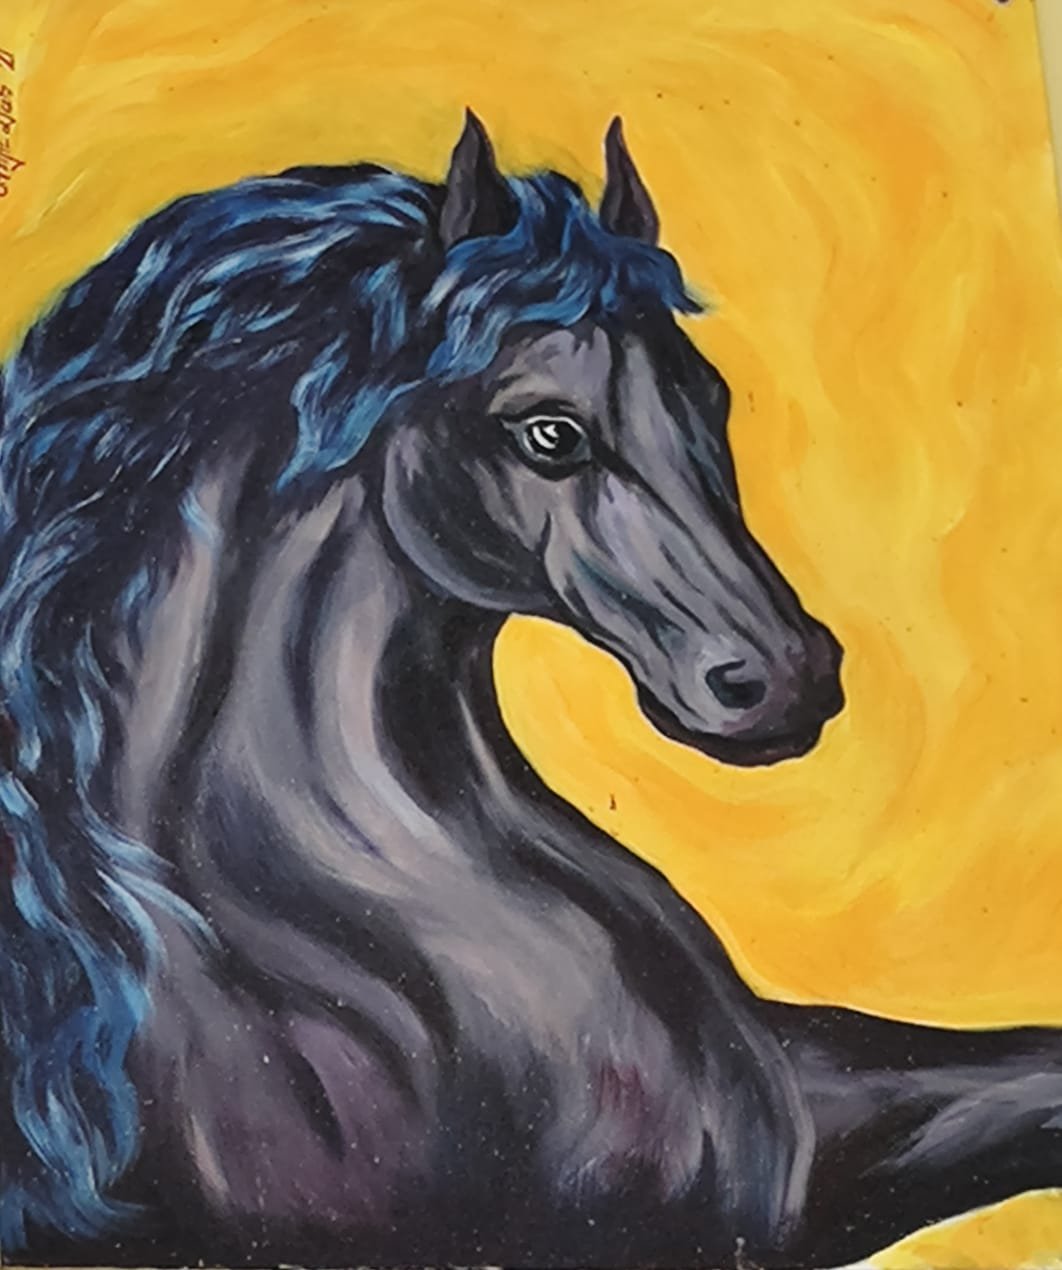 The Black Horse Painting - Necessity eStore - Order Now!